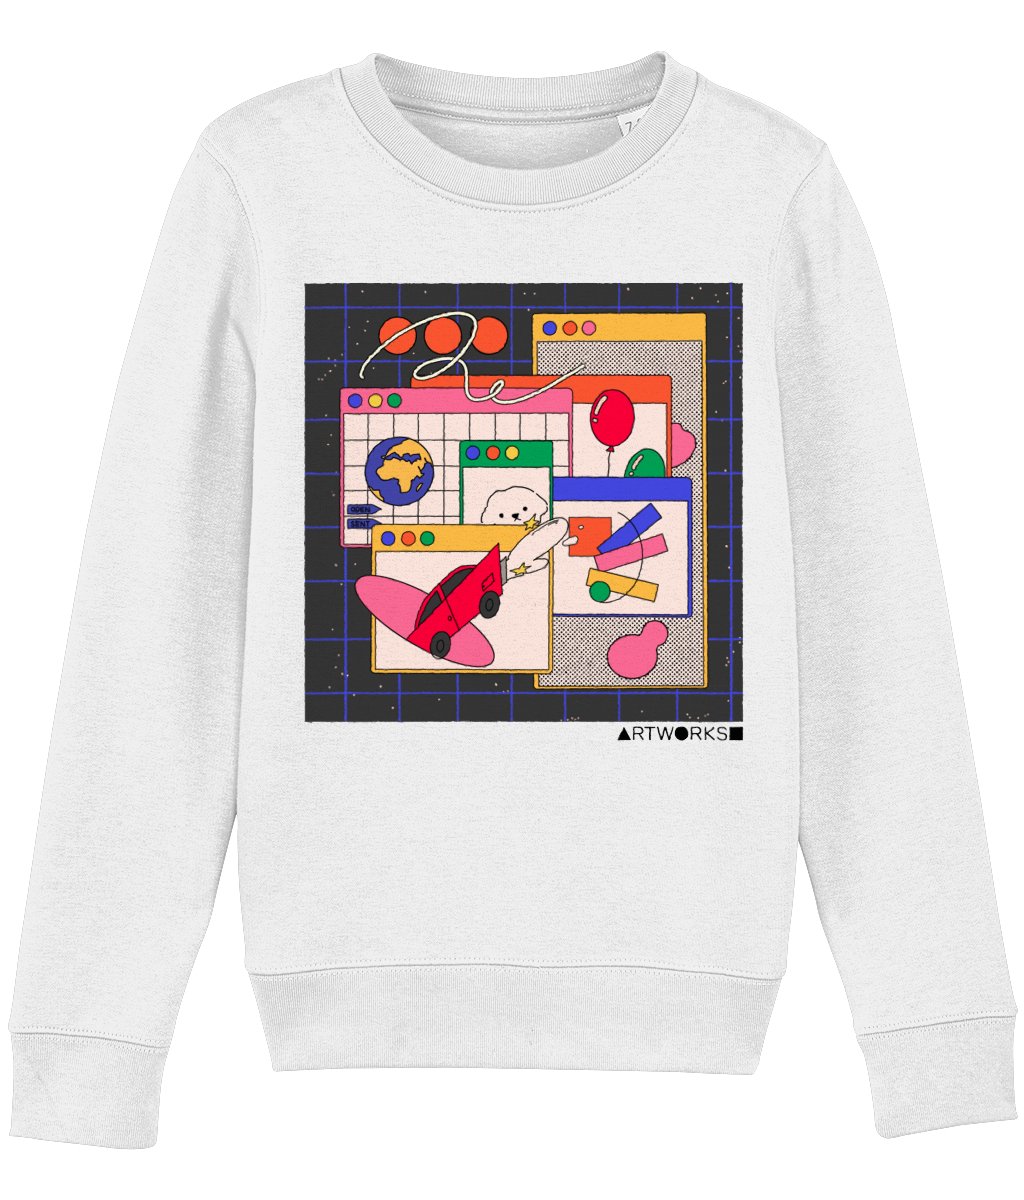 Cosmic Party Sweatshirt - Artworks Clothing